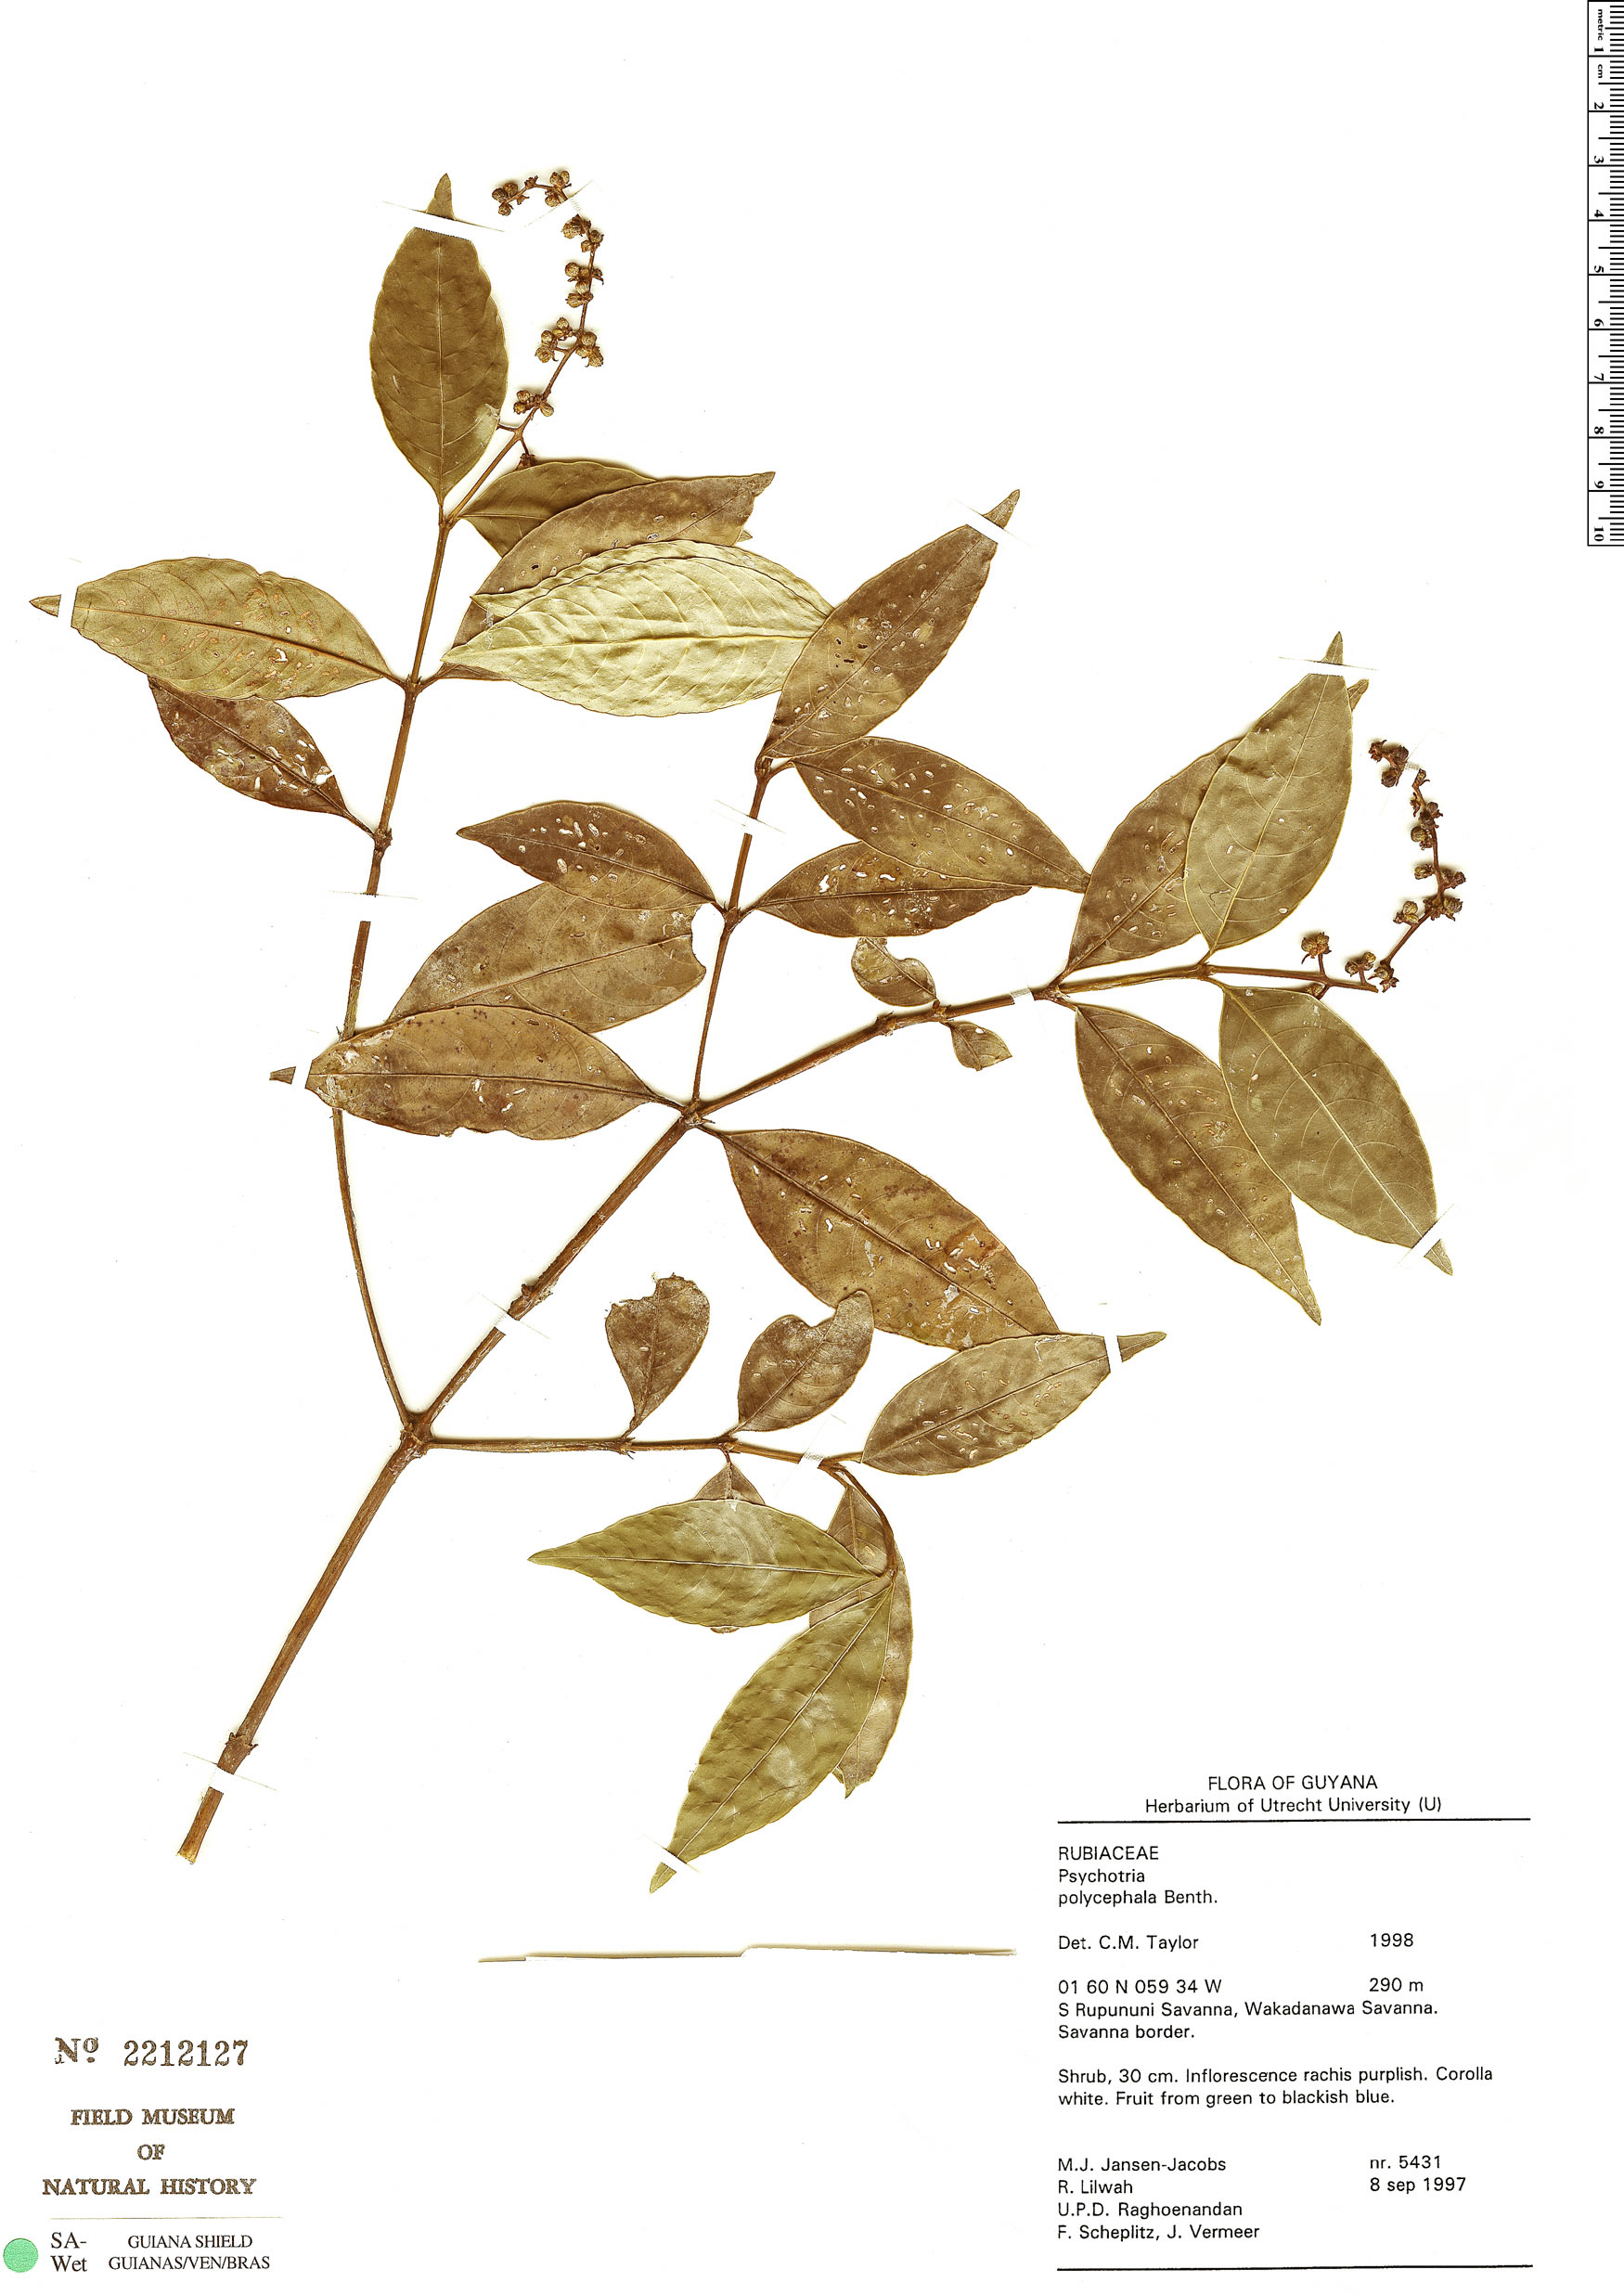 Psychotria polycephala image